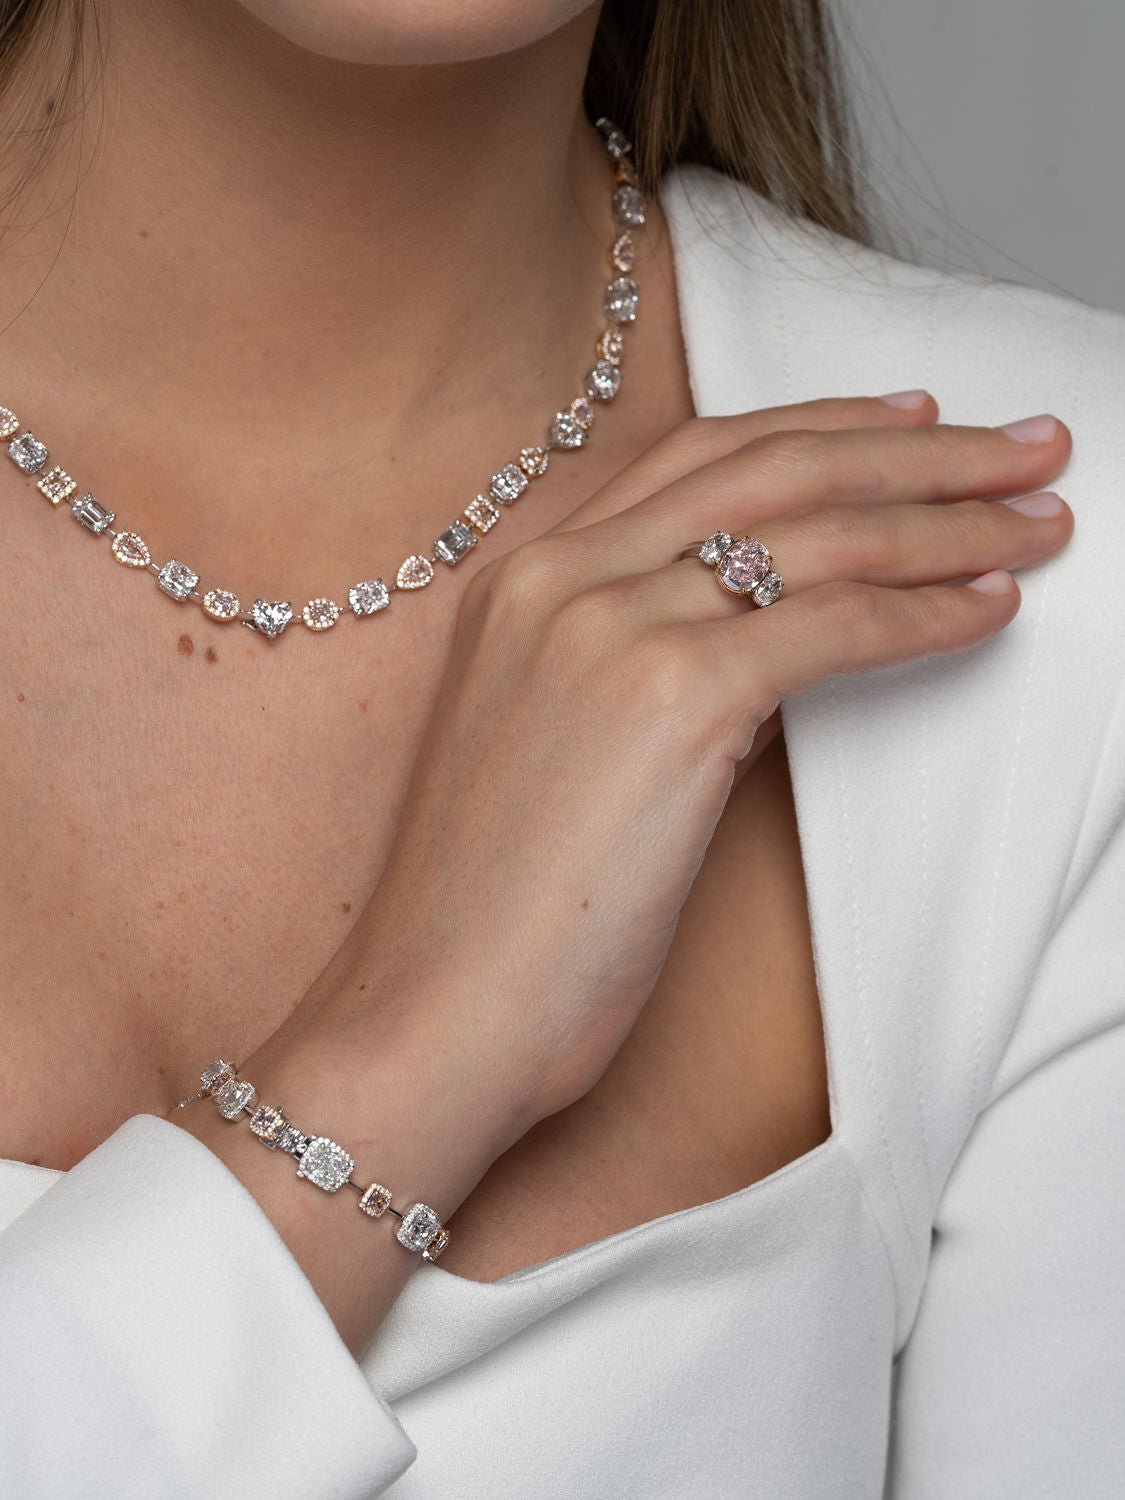 Shop Imitation Diamond Jewellery | Online Faux Diamond Store UK